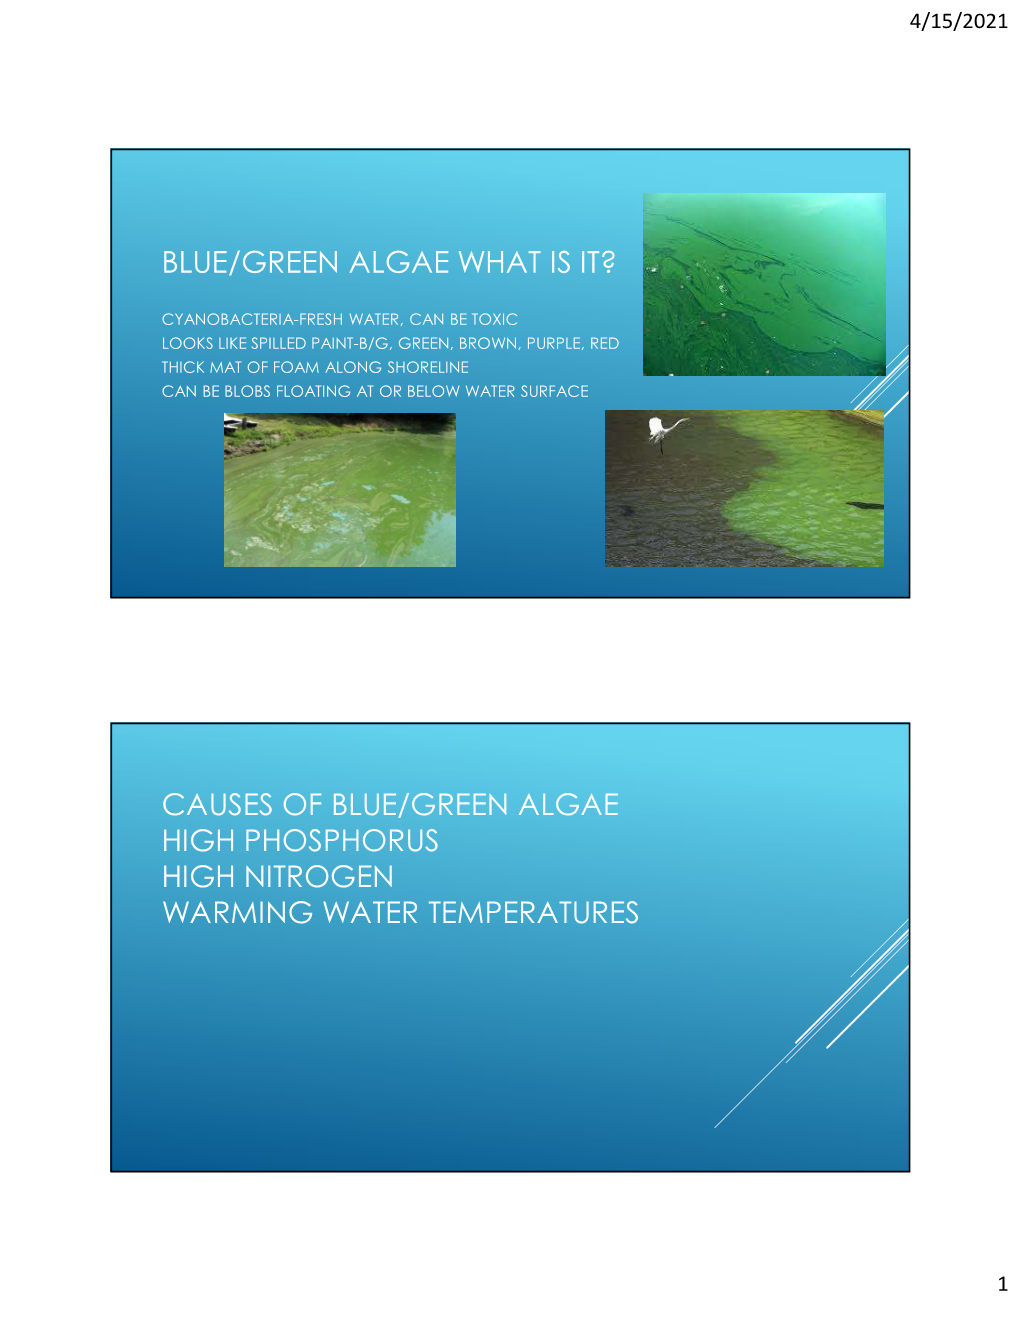 Blue/Green Algae What Is It?